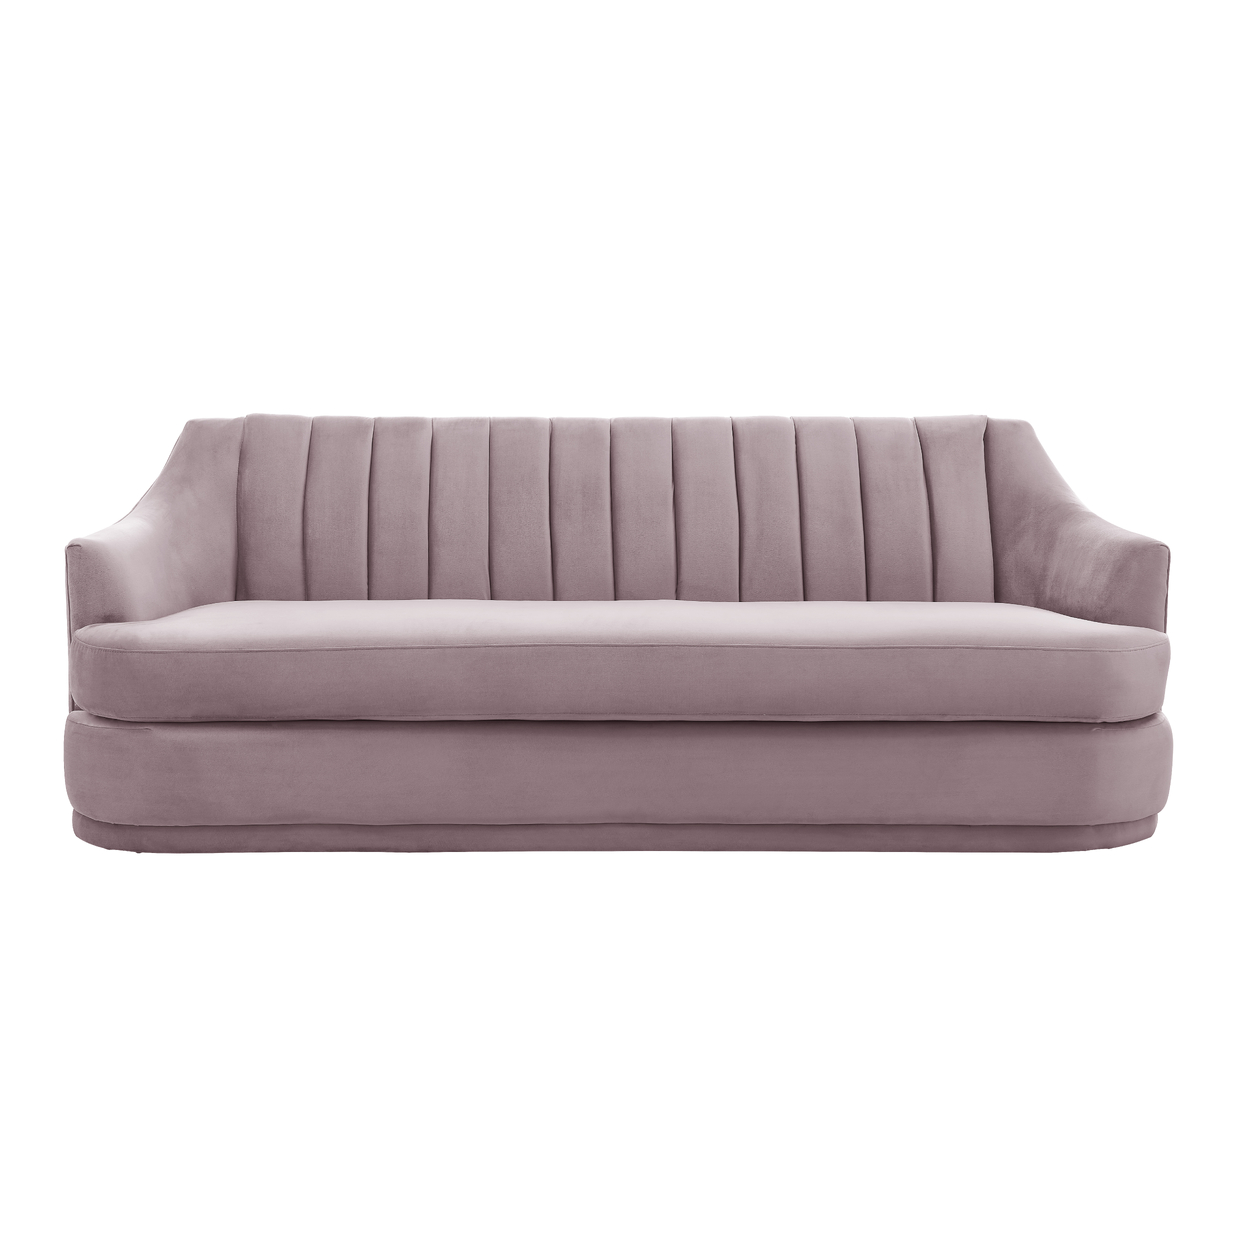 Iconic Home Rosa Sofa Velvet Upholstered Single Cushion Seat Vertical Channel Quilted Back Platform Base Design - Grey